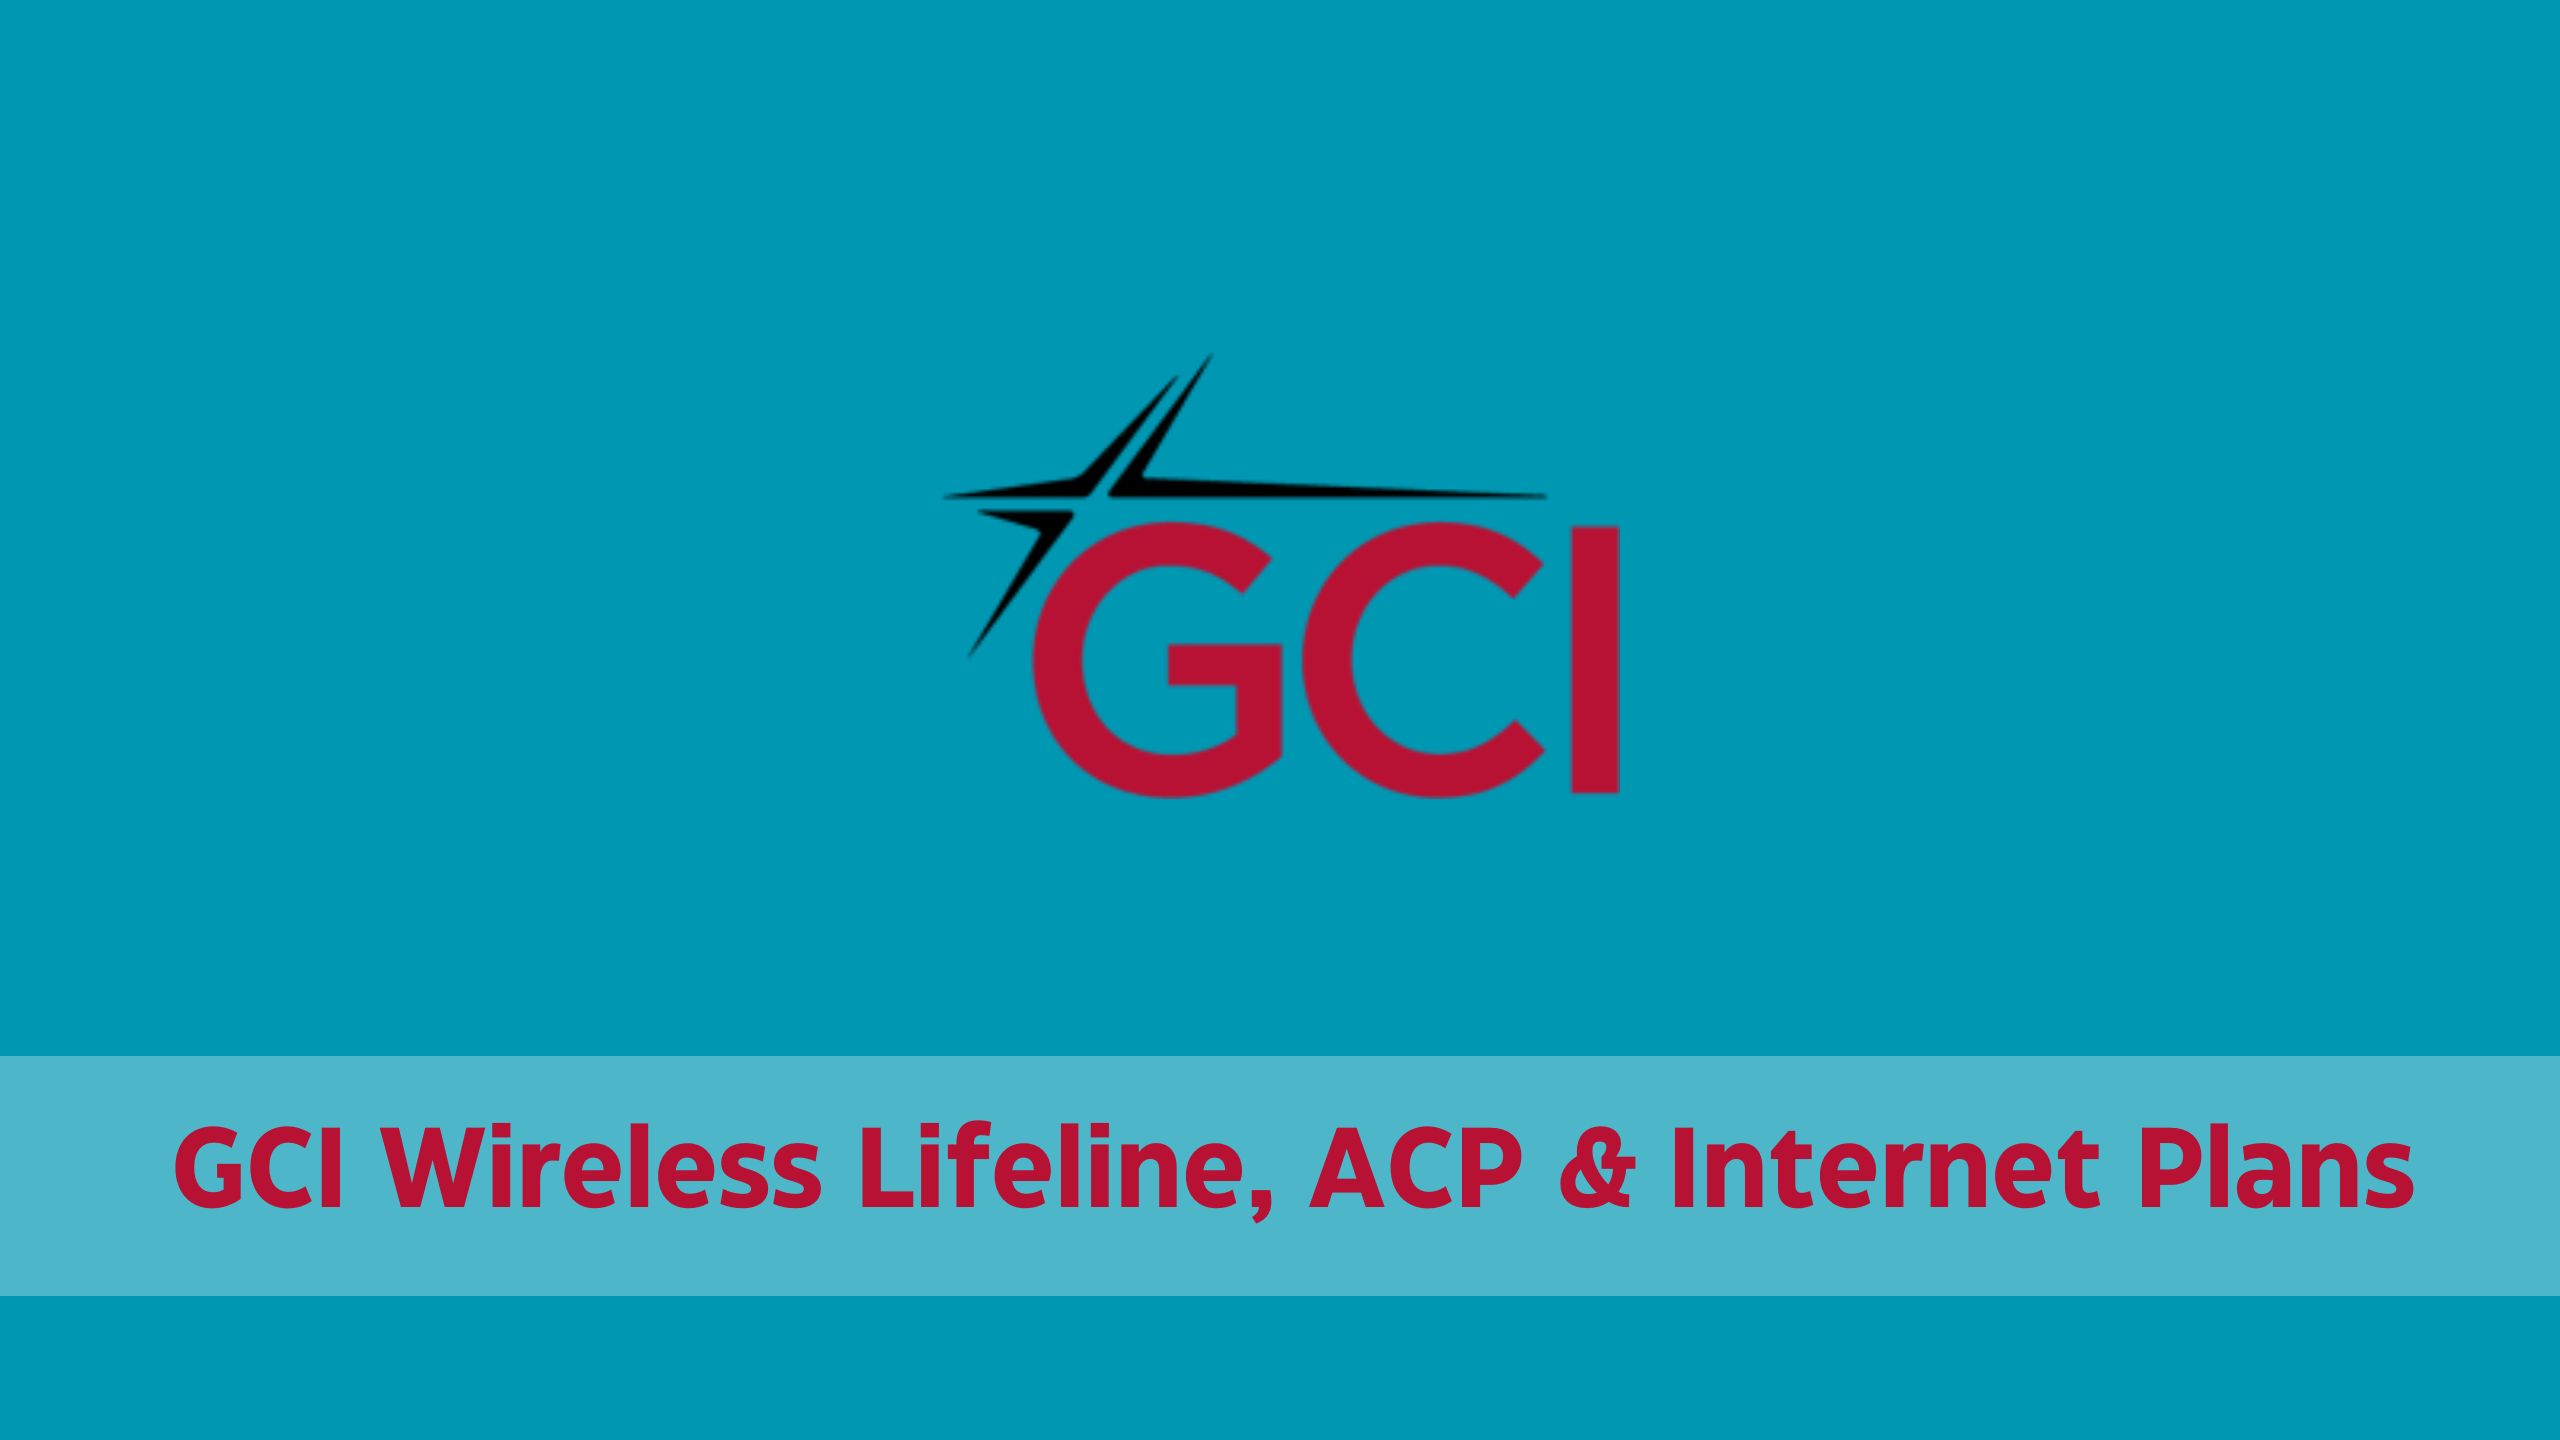 GCI Wireless Plans: Lifeline, ACP, Internet | Application for Discounted Phone & Free Internet